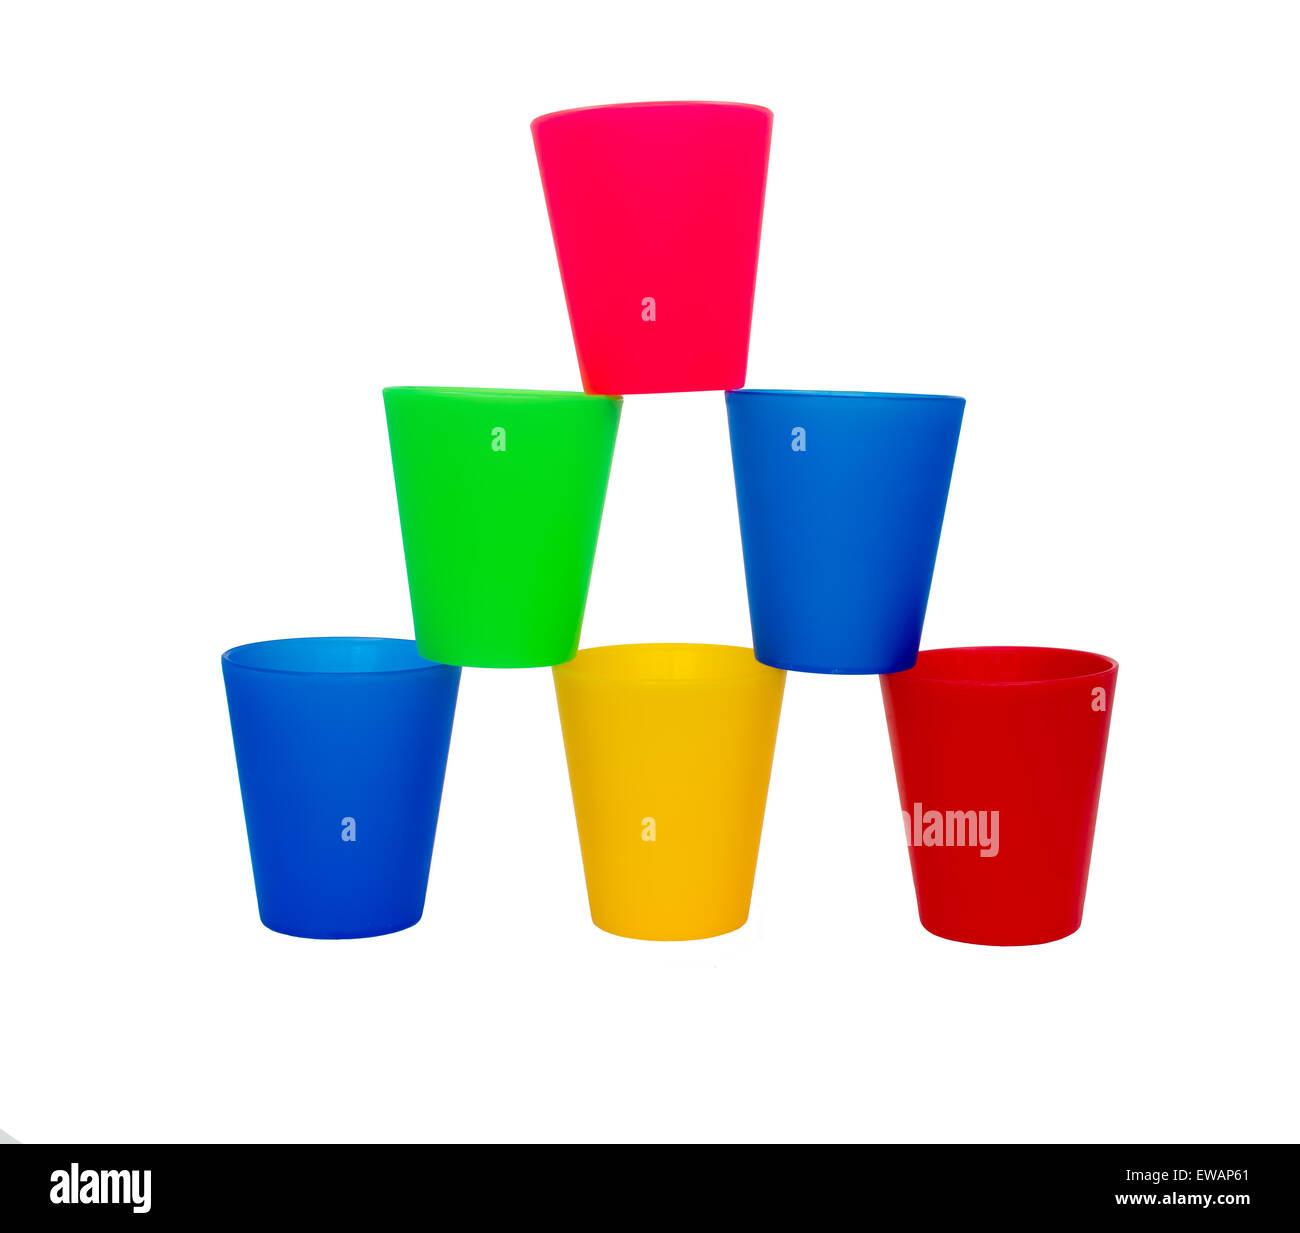 https://c8.alamy.com/comp/EWAP61/stacked-coloured-cups-EWAP61.jpg